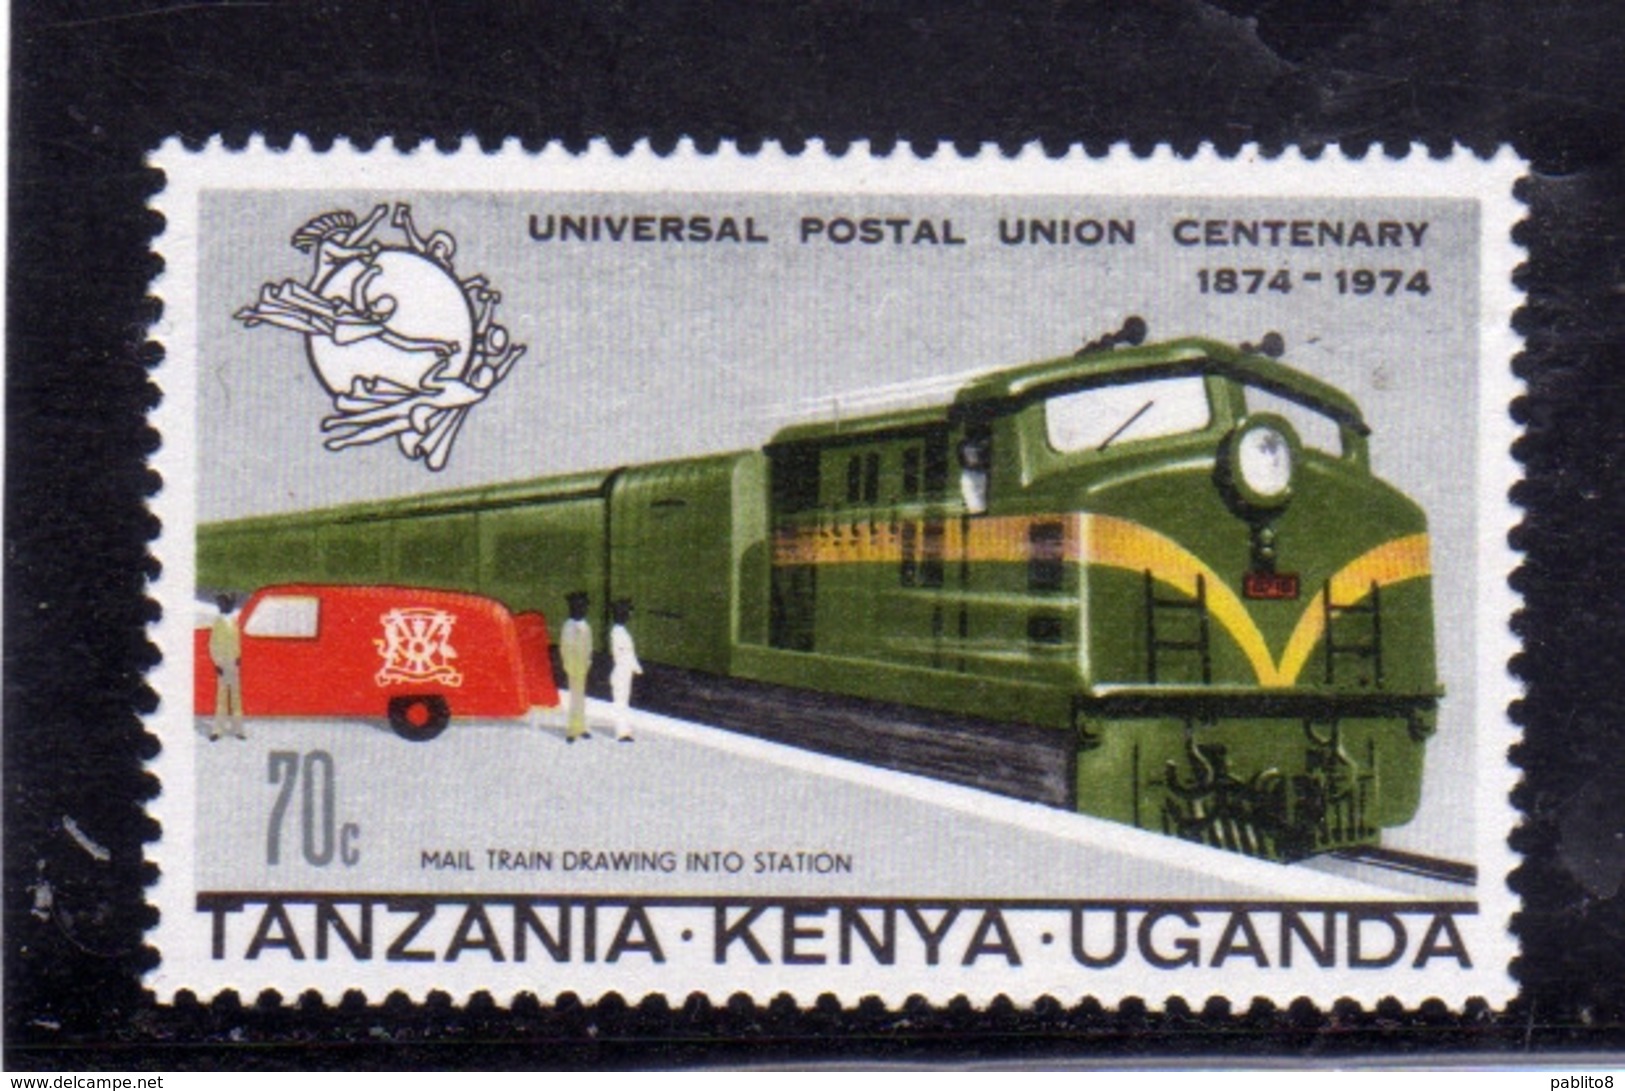 KENYA TANZANIA UGANDA 1974 UPU MAIL TRAIN AND TRUCK 70c MNH - Kenia (1963-...)